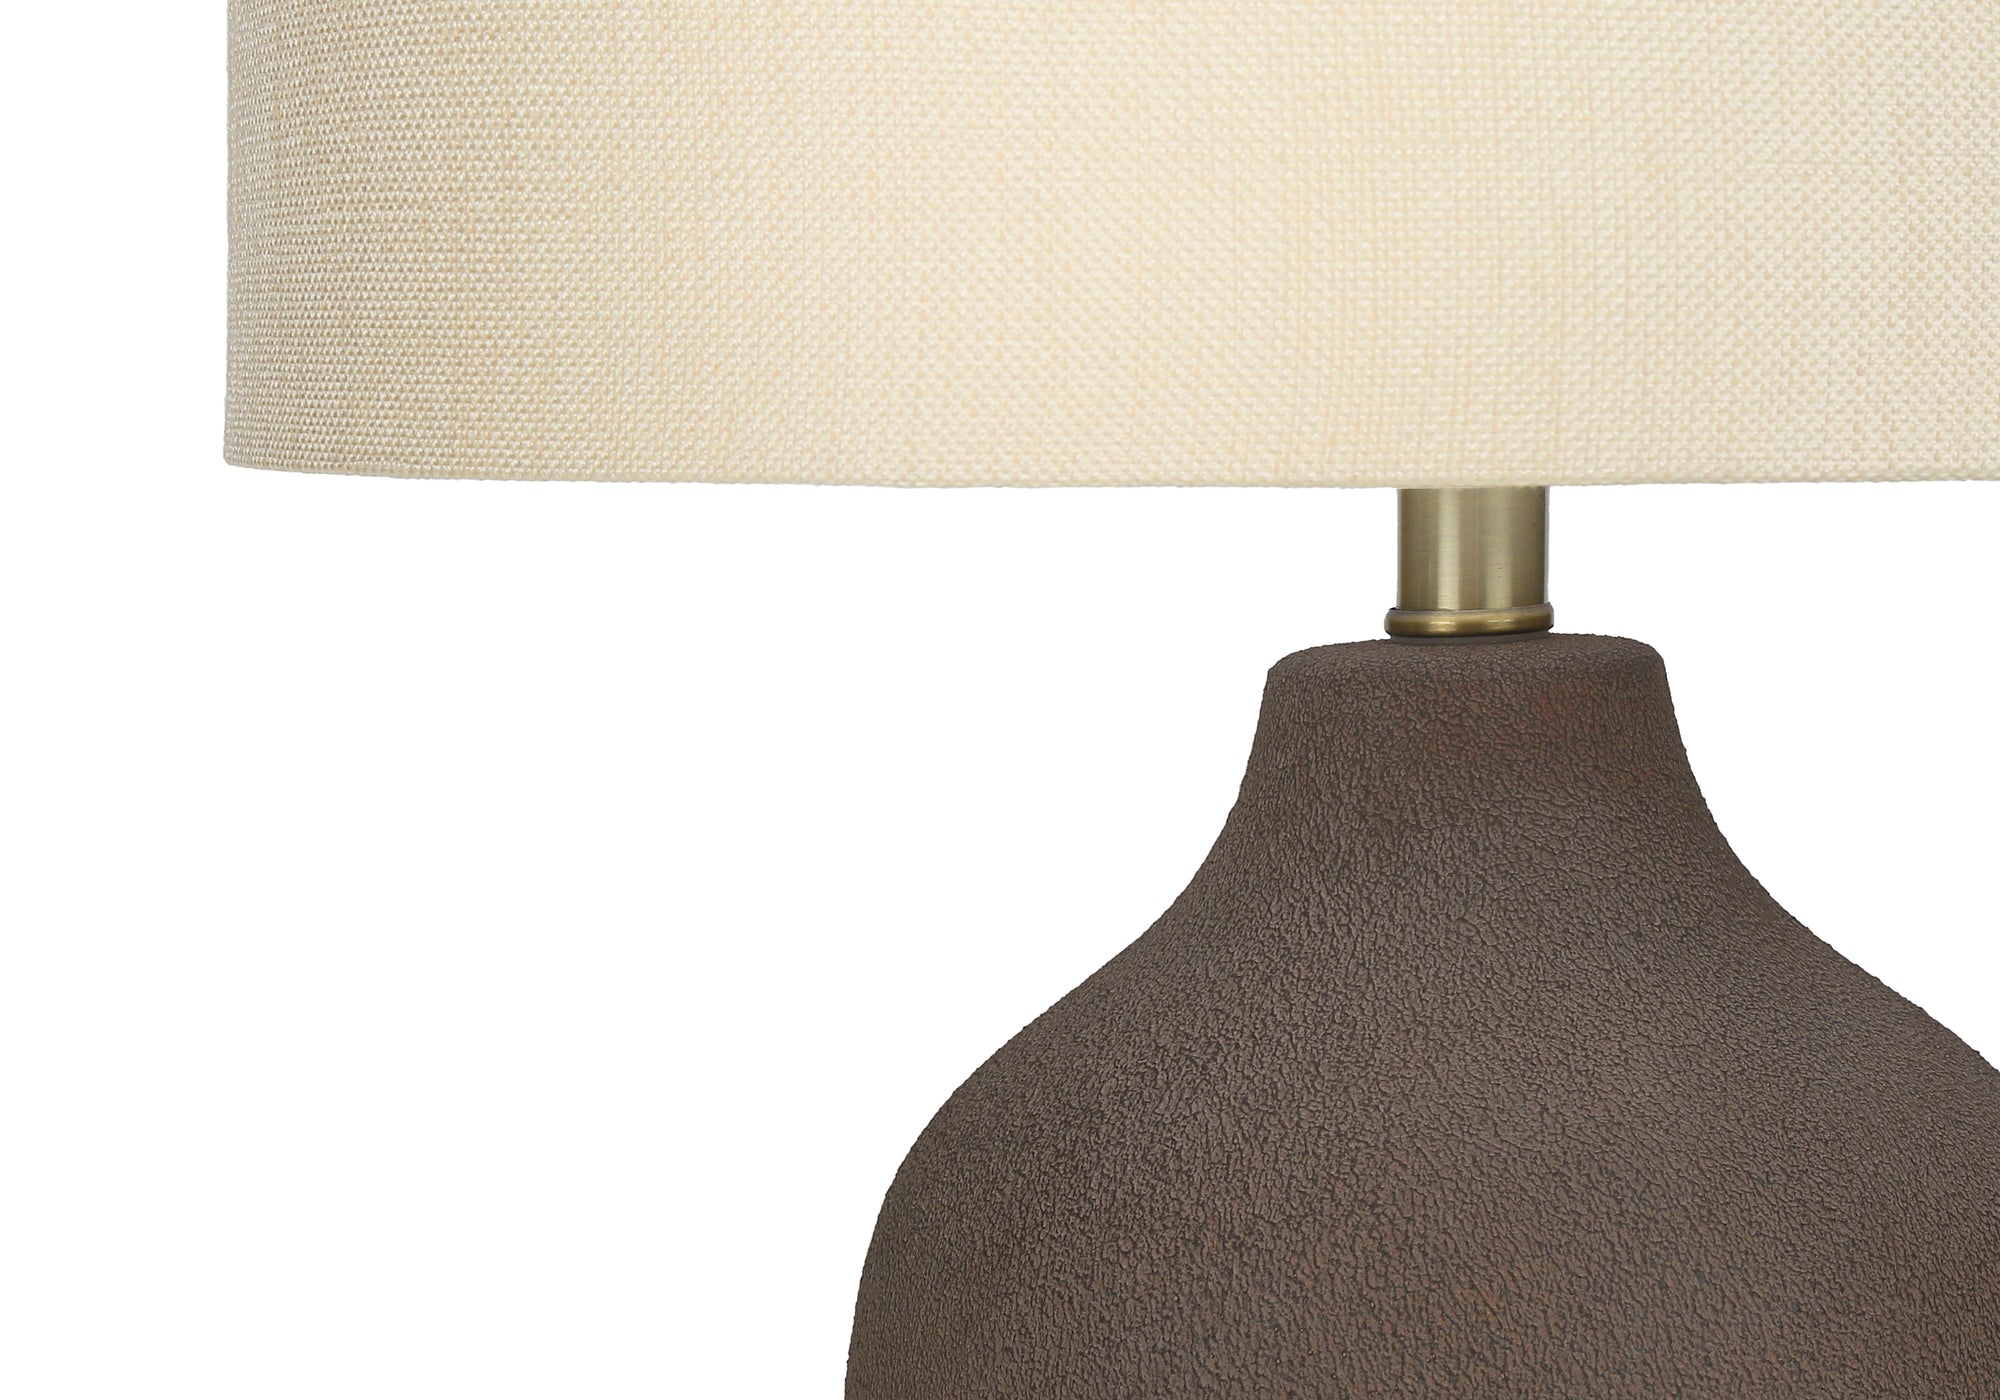 MN-439709    Lighting, 27"H, Table Lamp, Grey Ceramic, Beige Shade, Contemporary